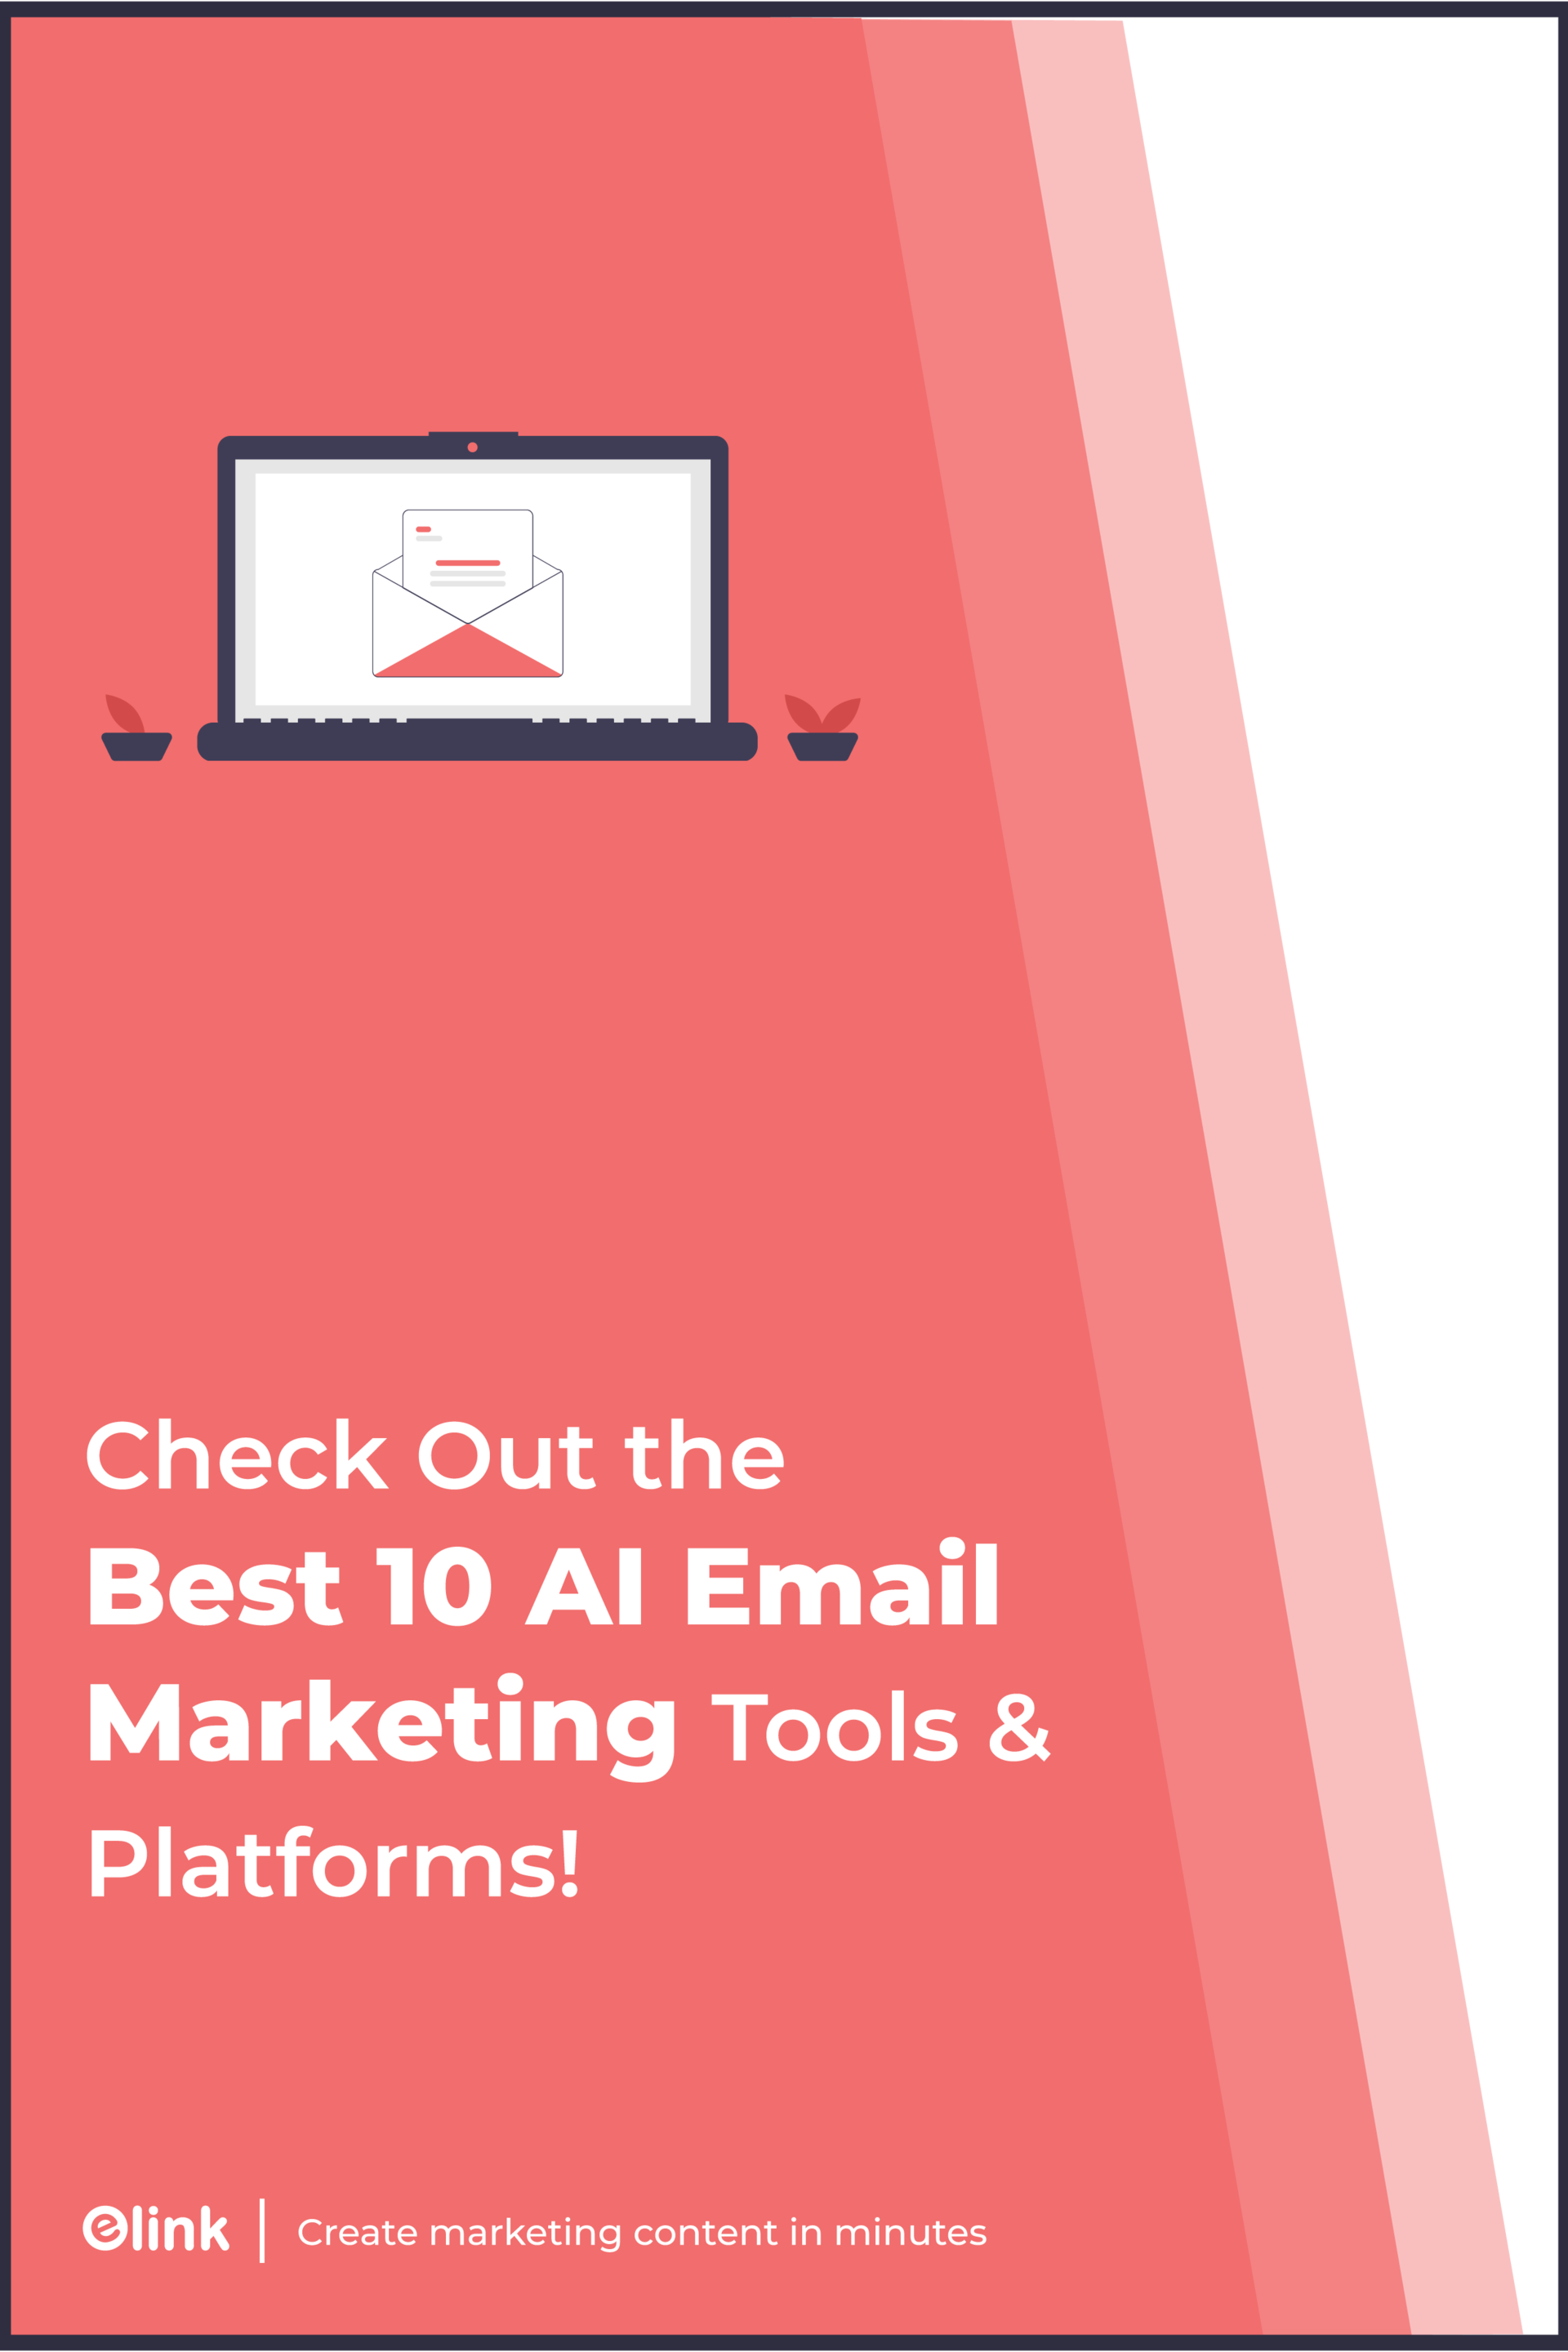 Banner do Pinterest de ferramentas de marketing de IA